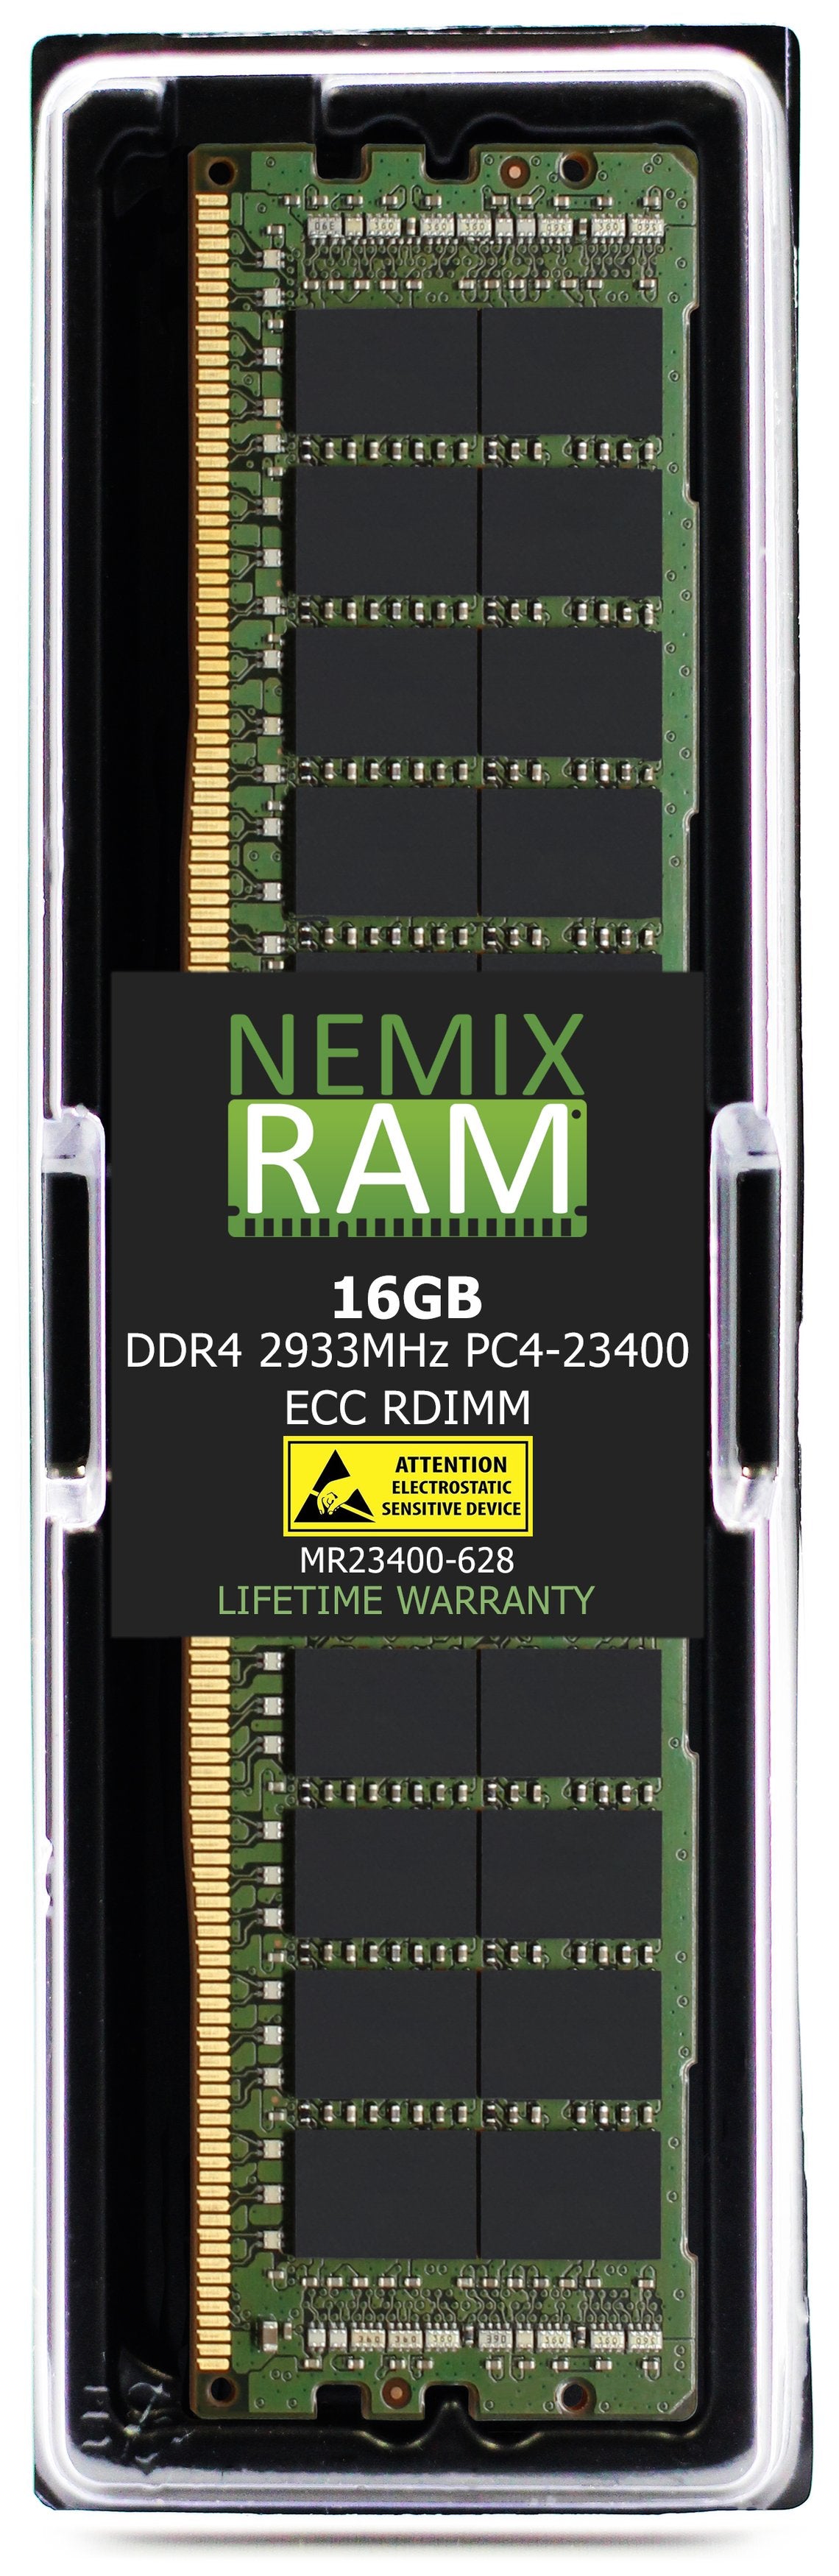 16GB DDR4 2933MHZ PC4-23400 RDIMM Compatible with Supermicro MEM-DR416L-HL05-ER29